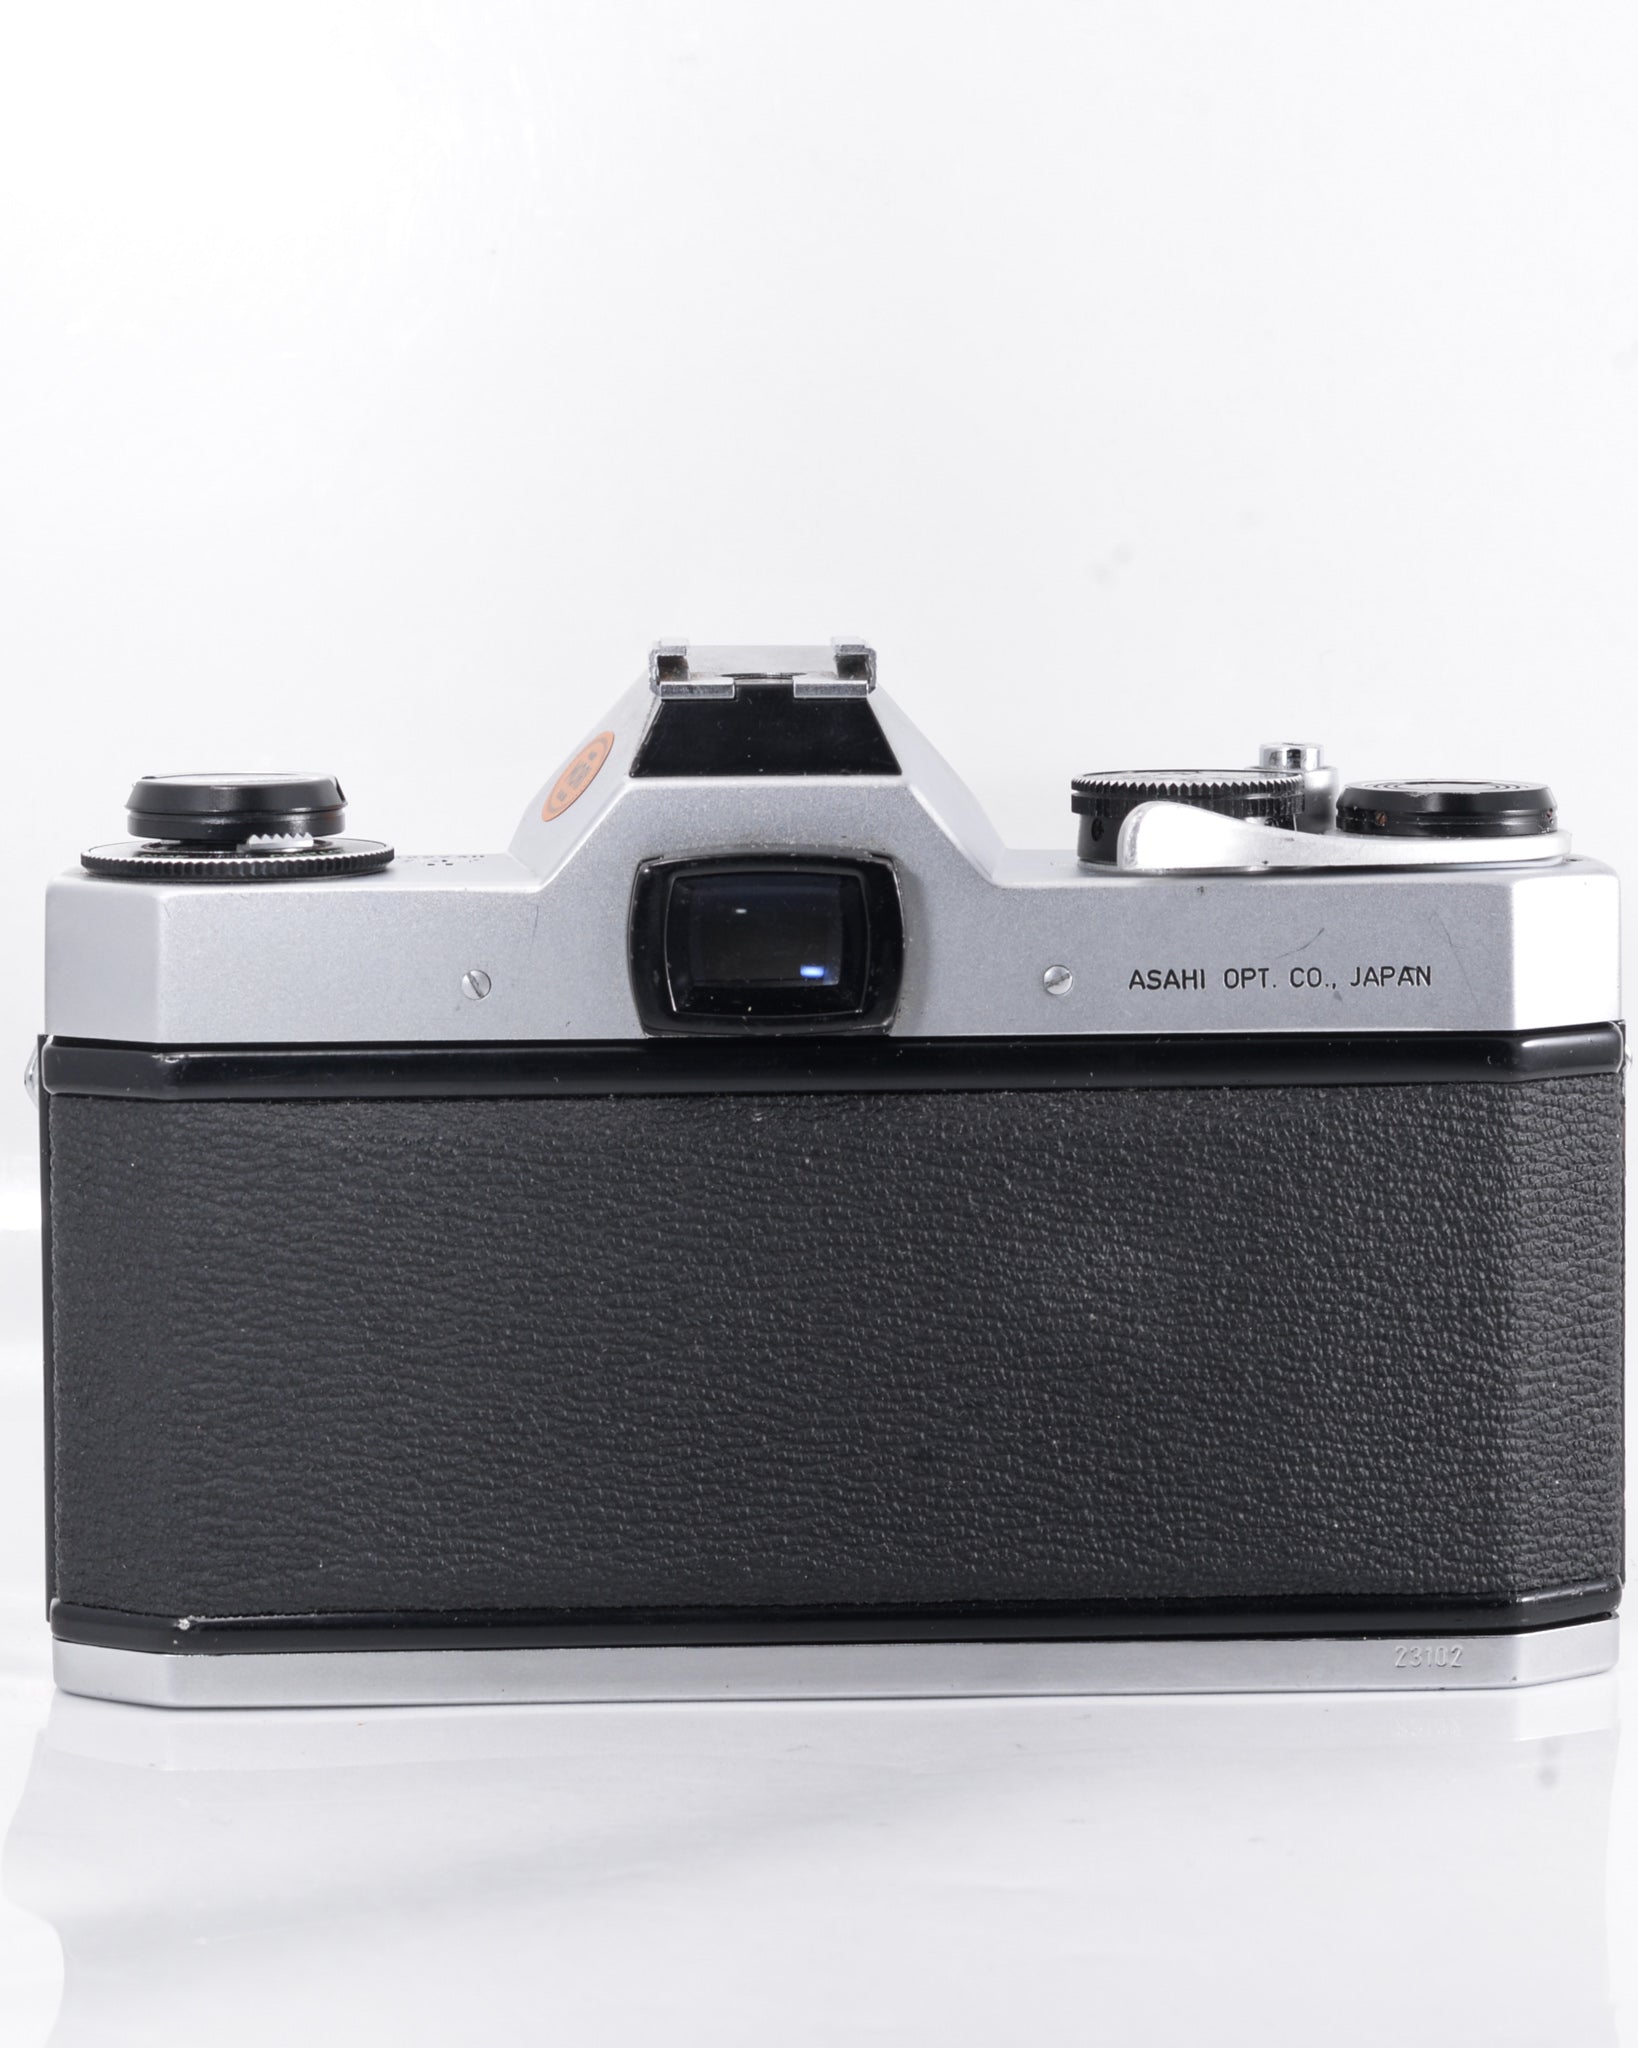 Pentax Spotmatic SP II 35mm SLR film camera with 28mm f3.5 lens